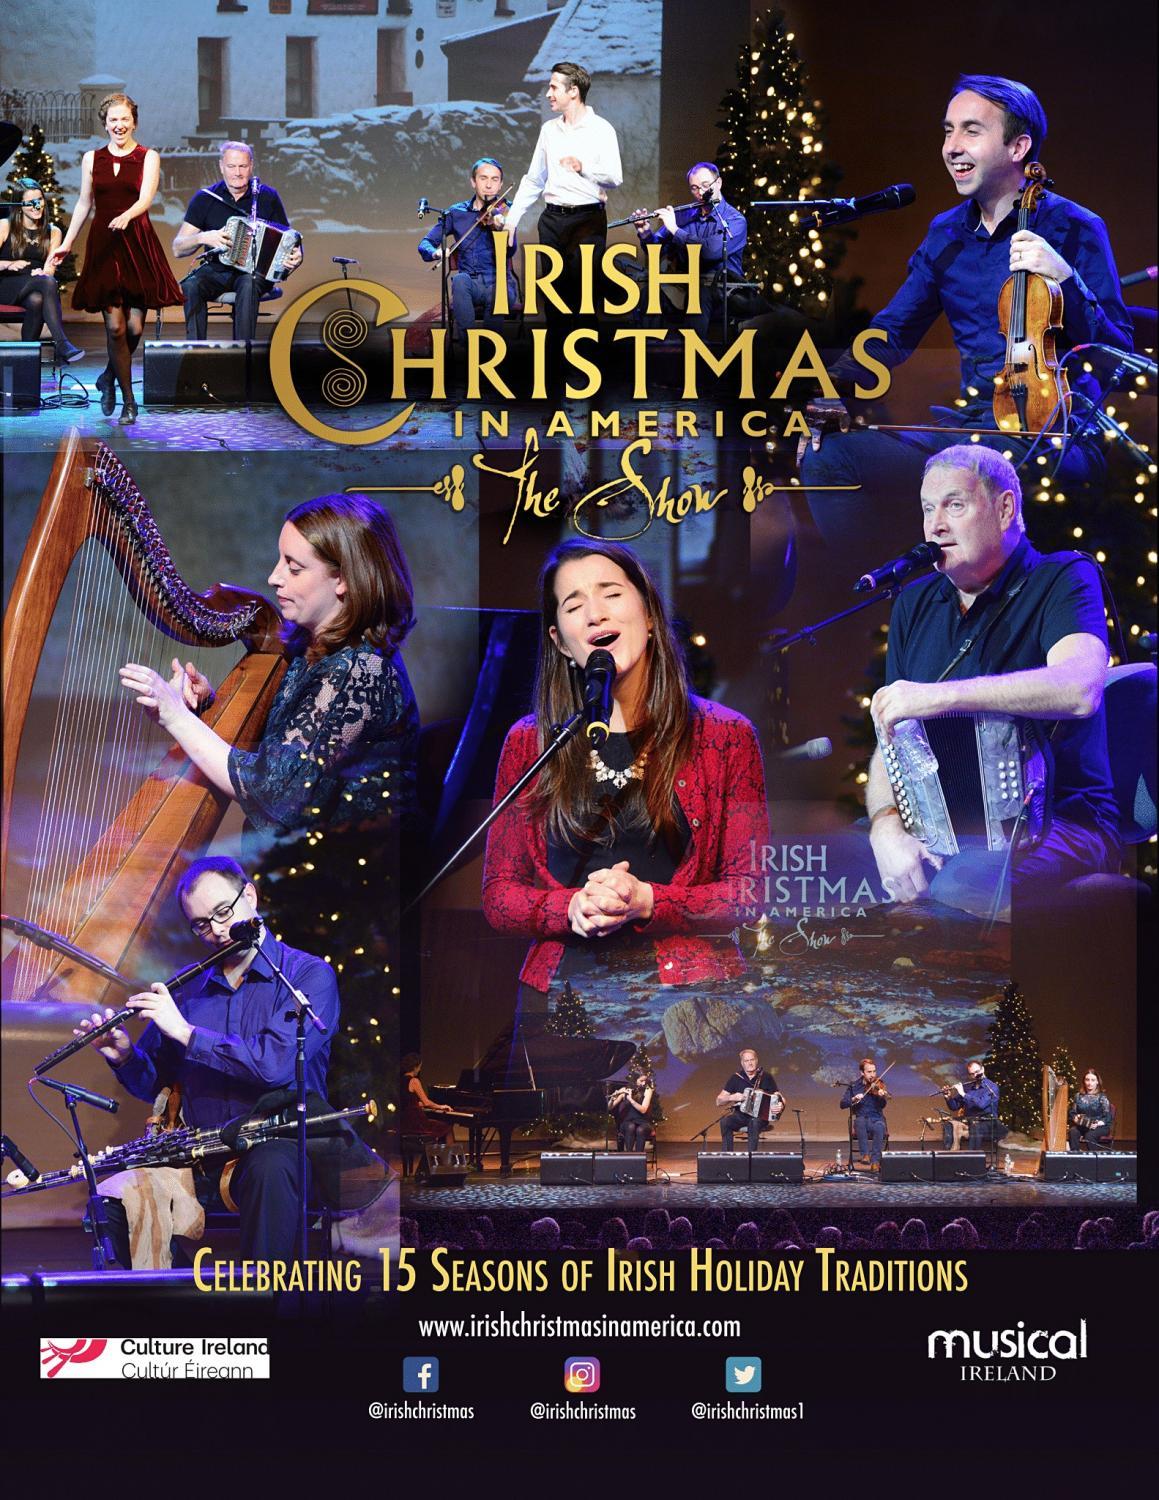 An Irish Christmas in America